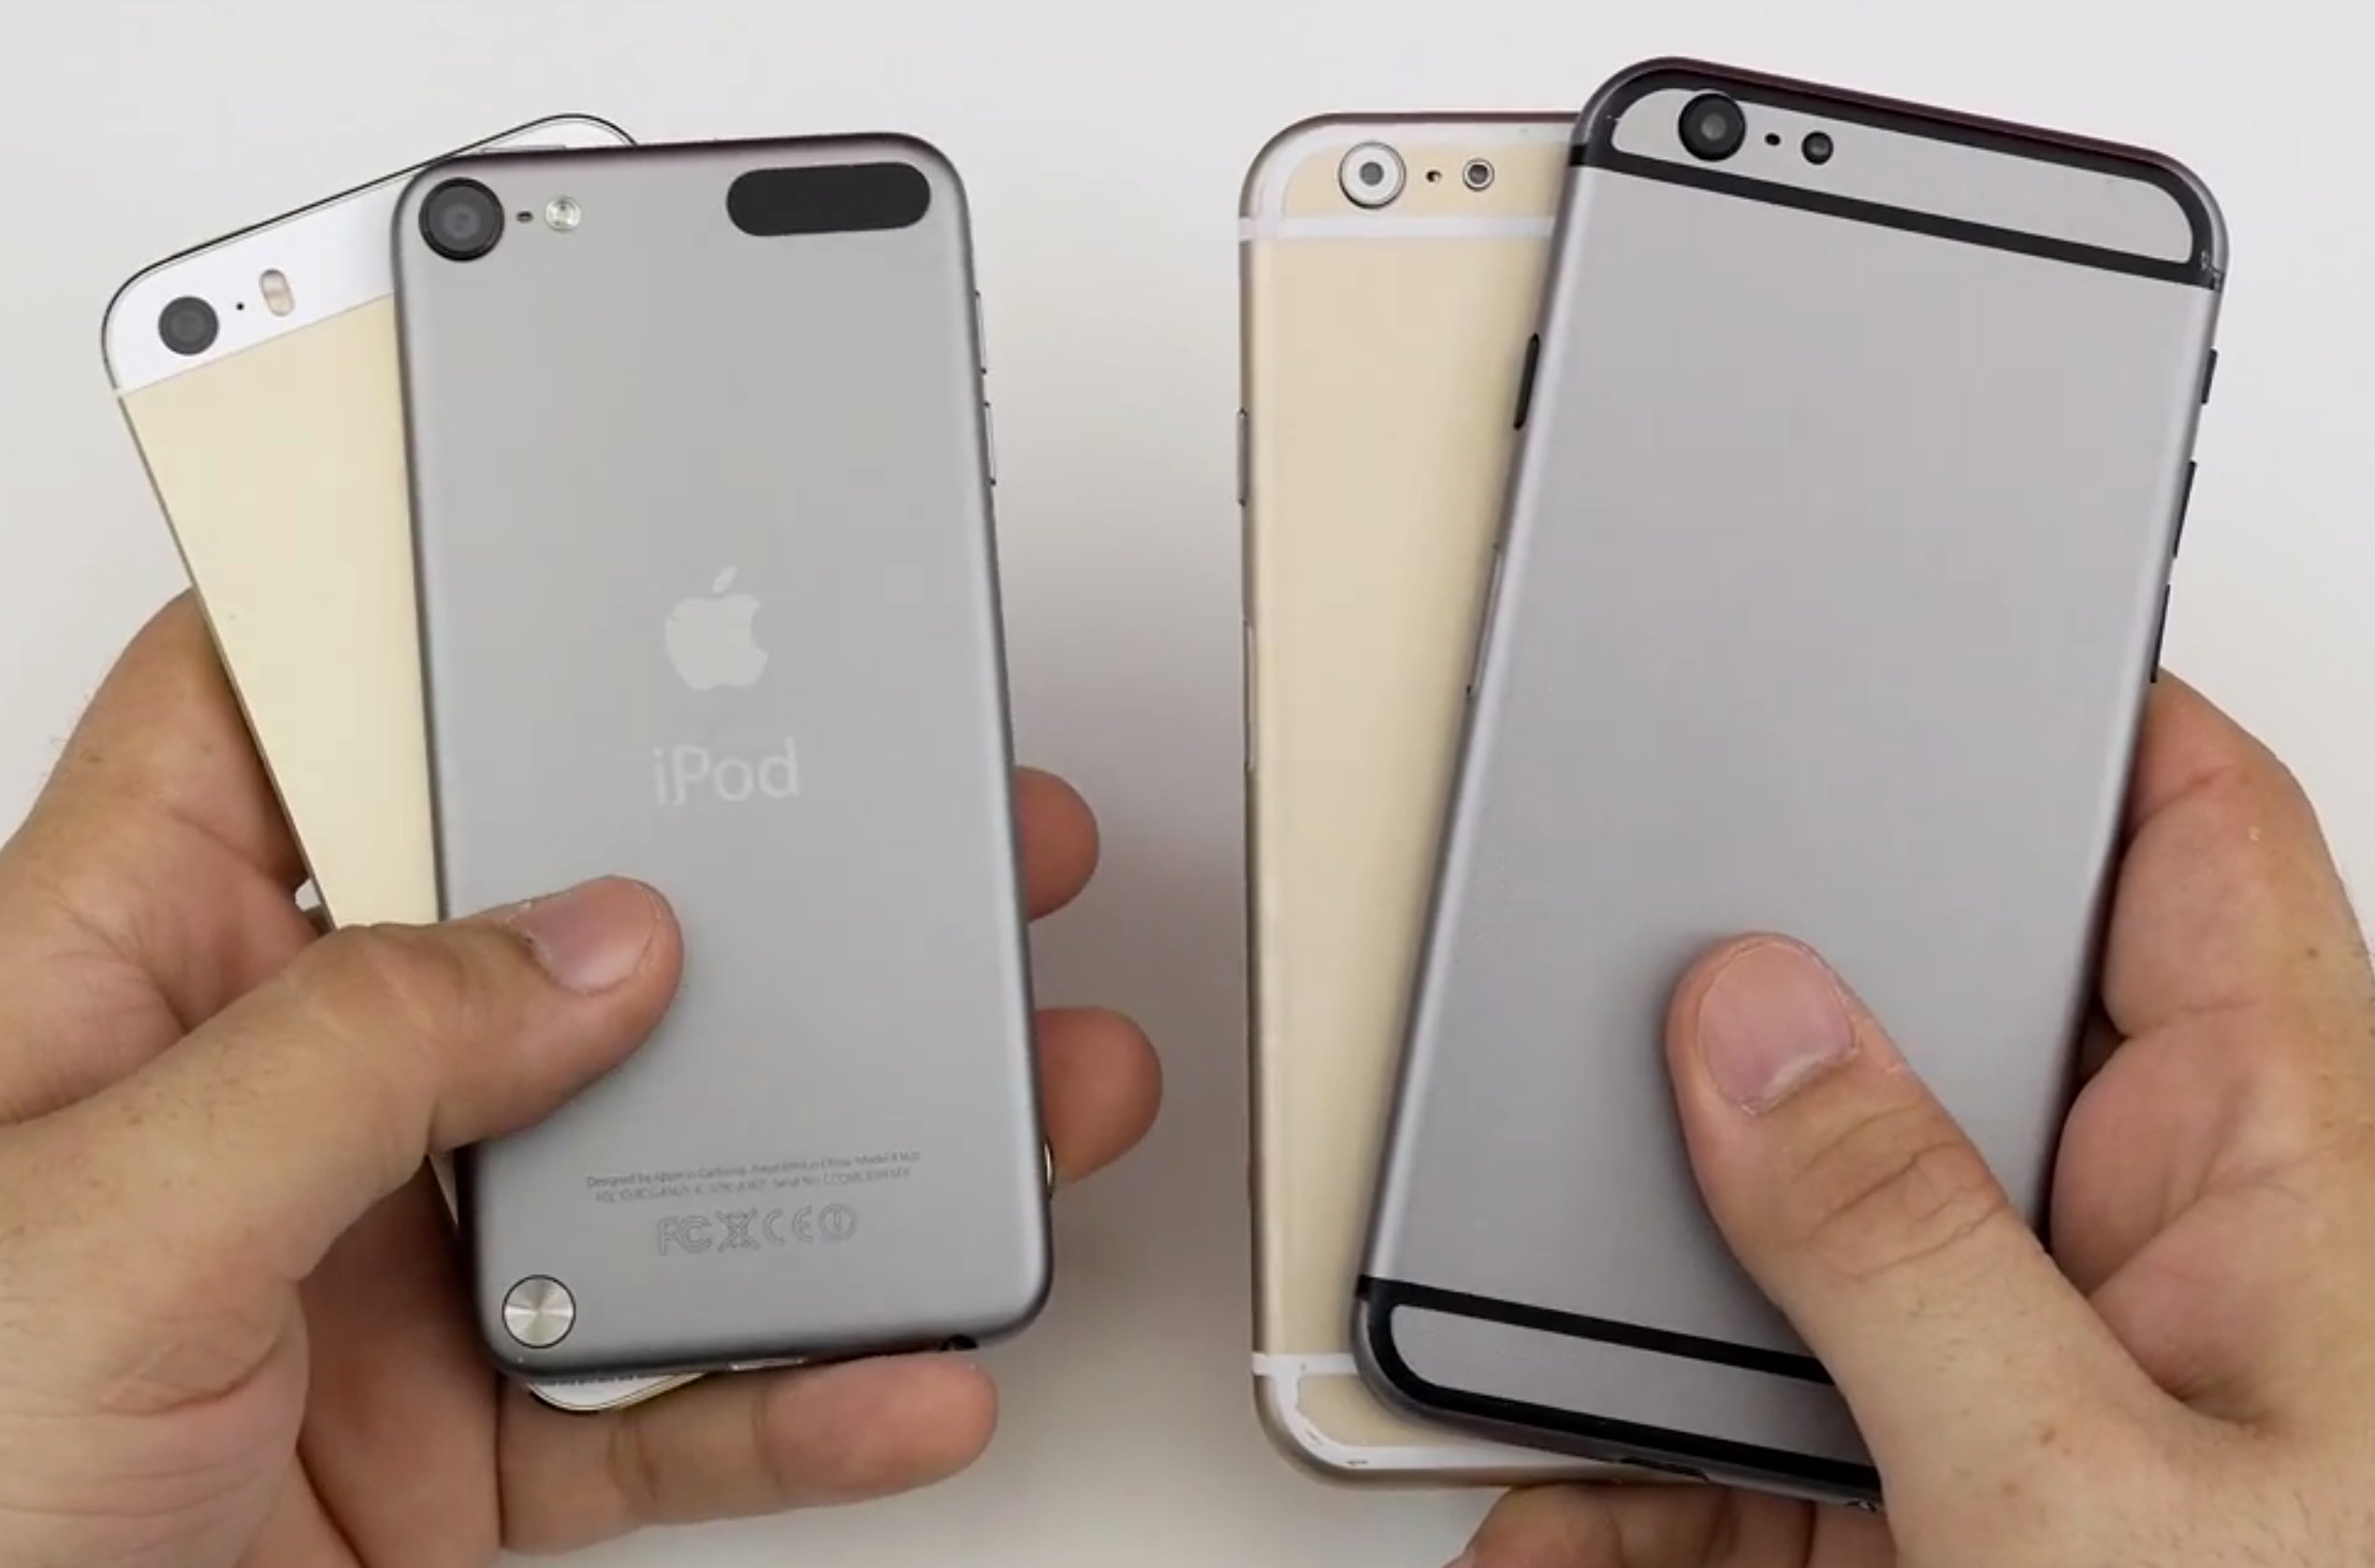 Vergleich: iPhone 6, iPhone 5s vs. Banane, gold vs. spacegrau 4